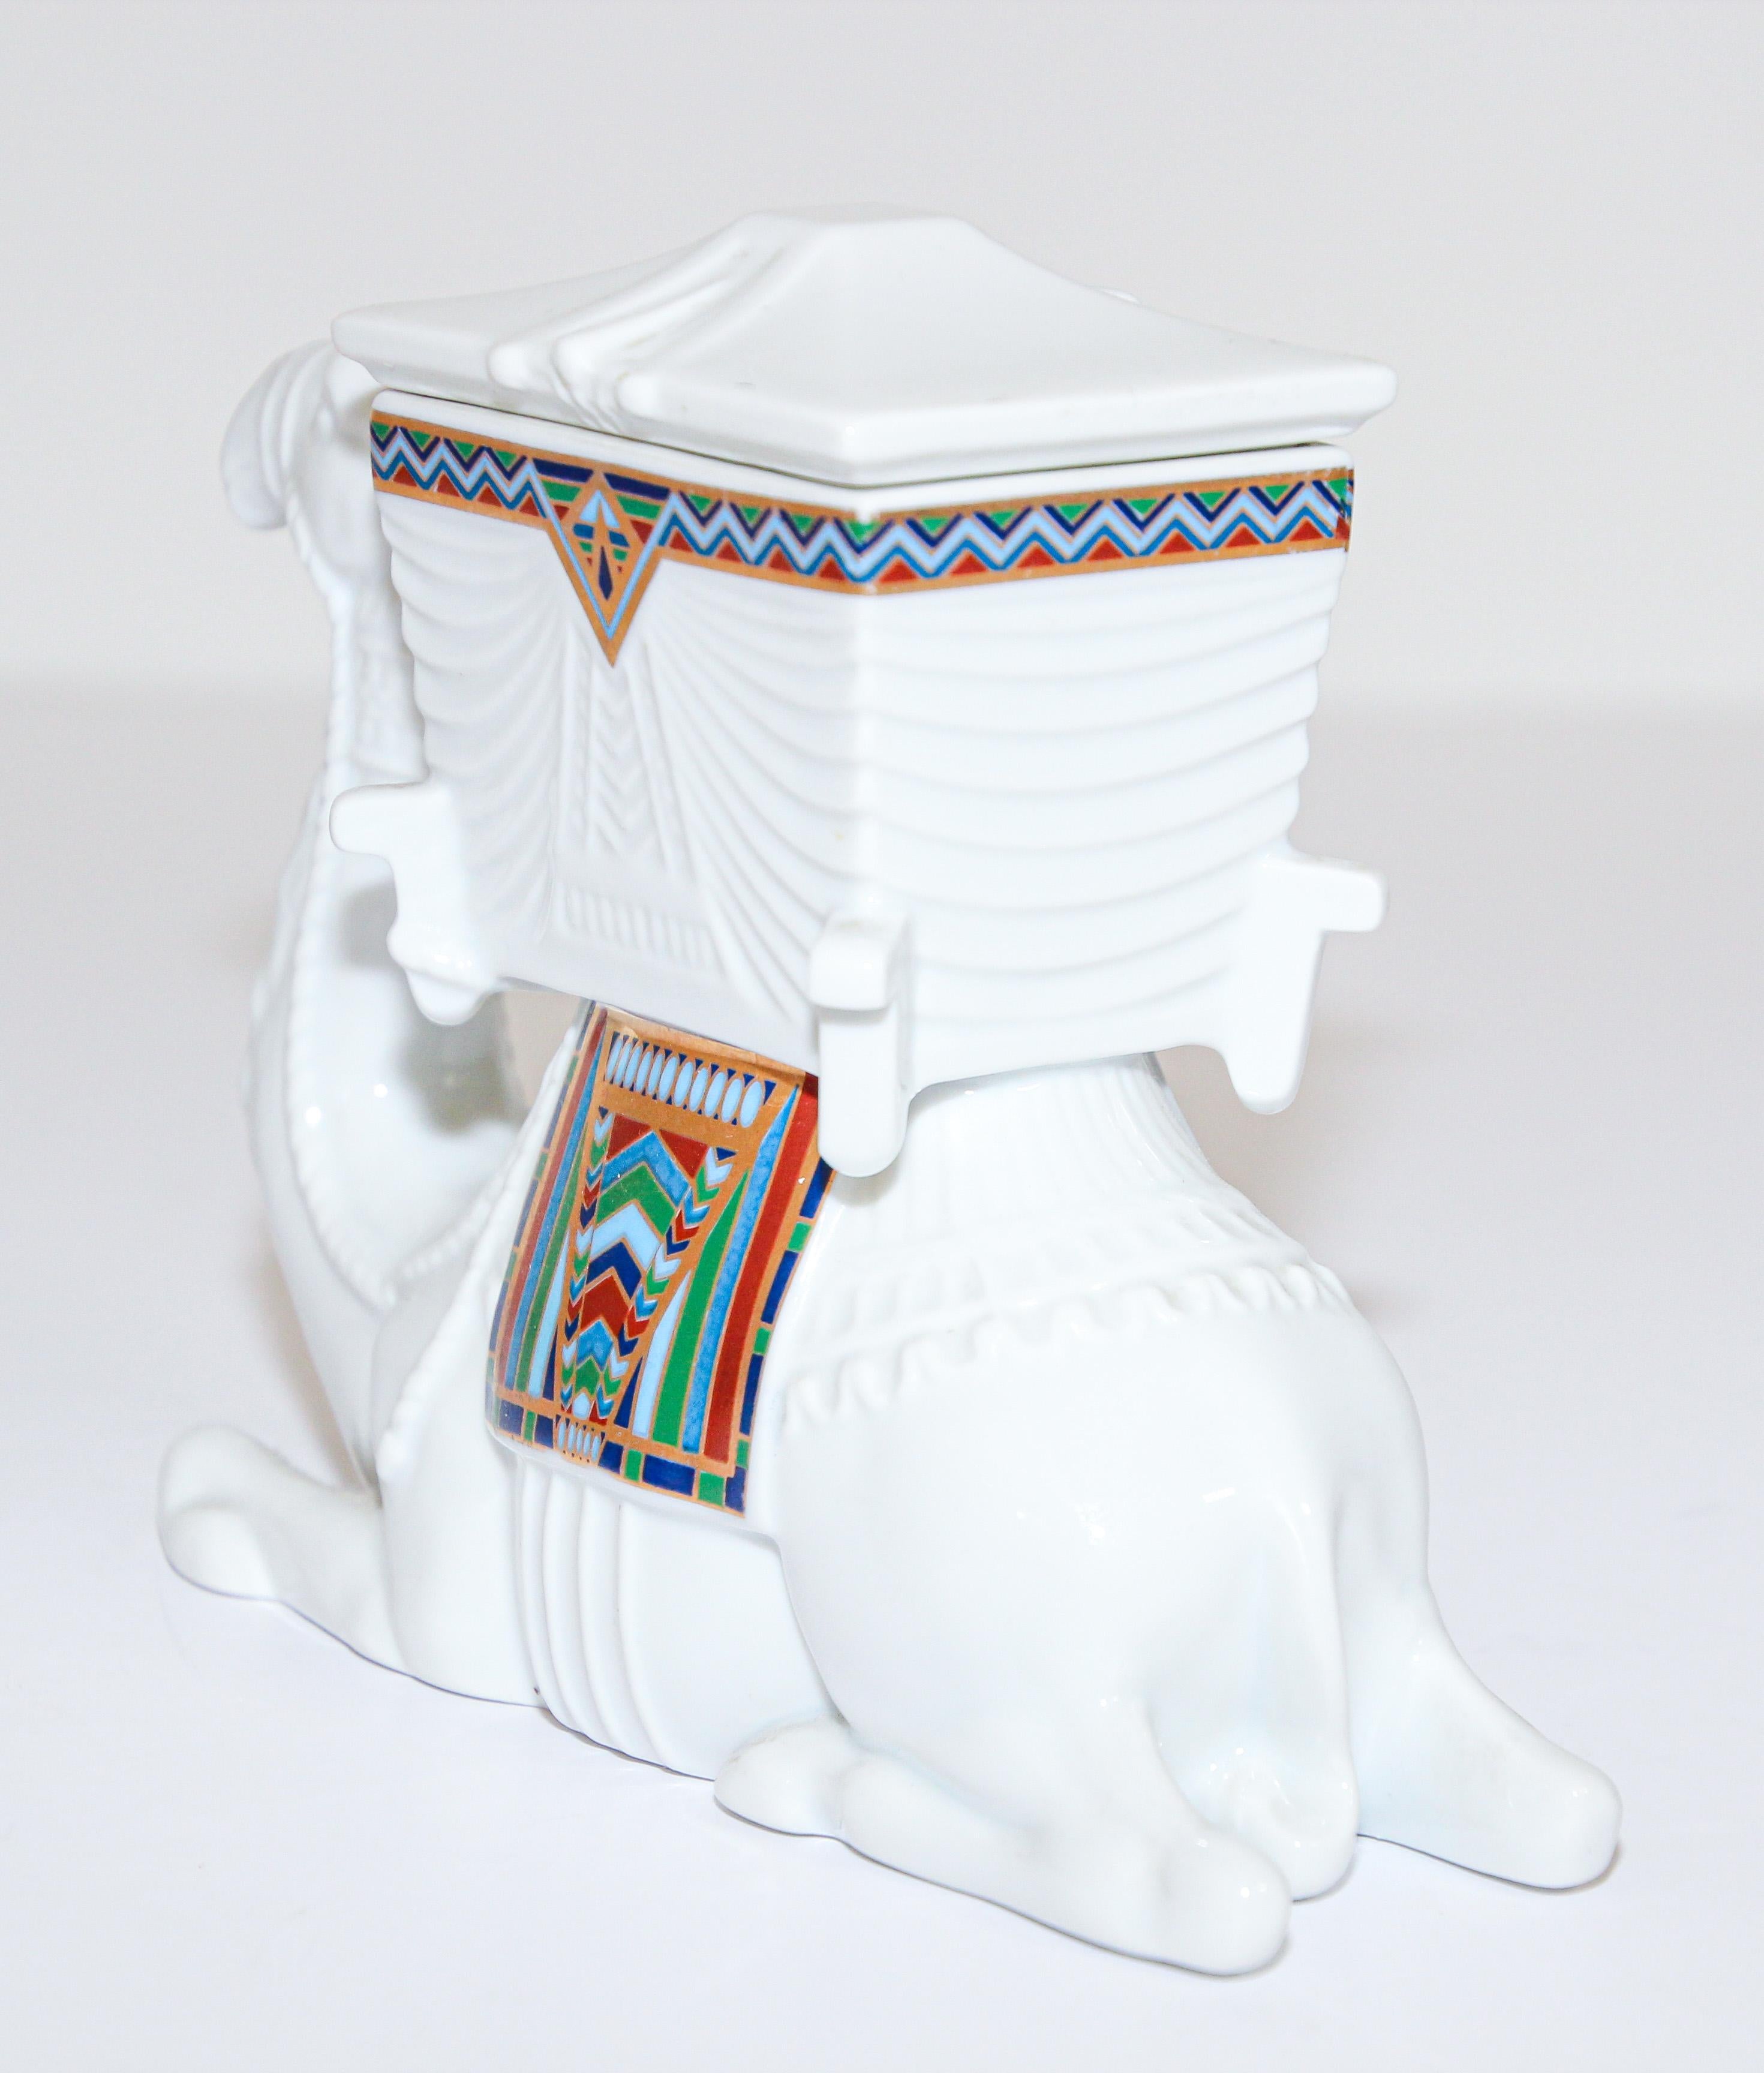 20th Century Treasures of the Pharaohs Porcelain Royal Camel by Elizabeth Arden